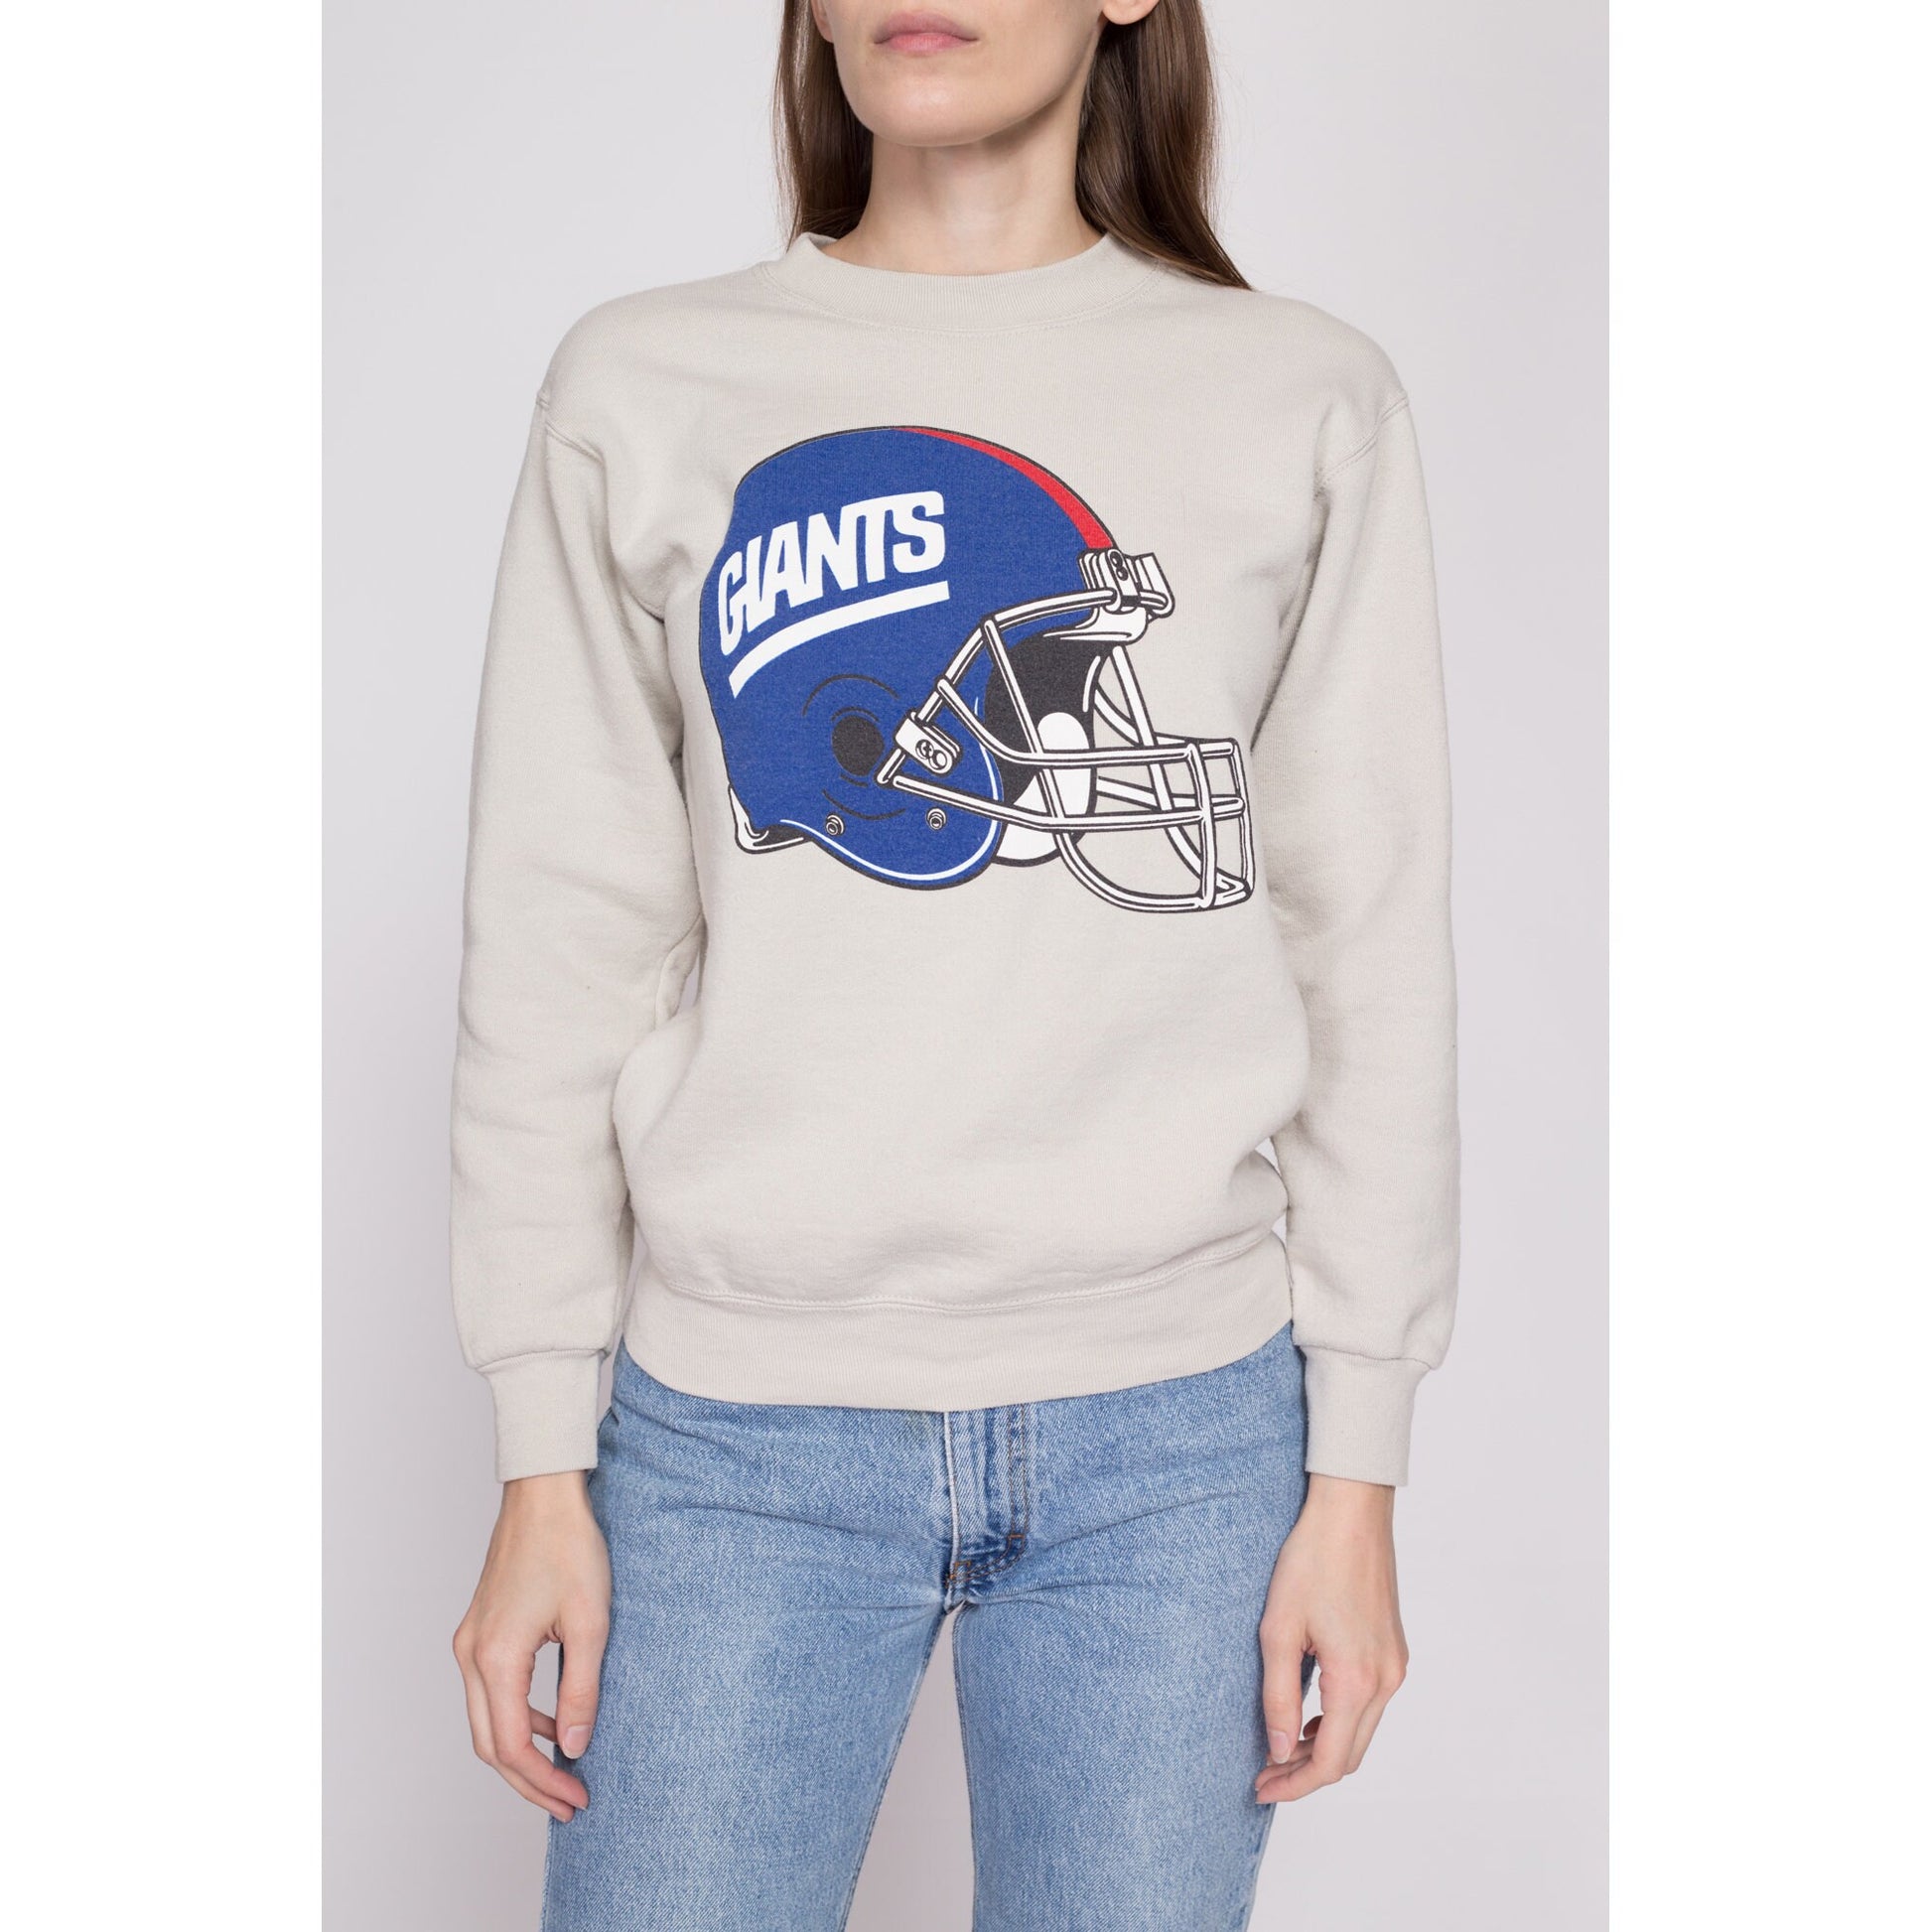 XS-S| 90s New York Giants Sweatshirt - Men's XS, Women's Small | Vintage NFL Football Graphic Crewneck Pullover